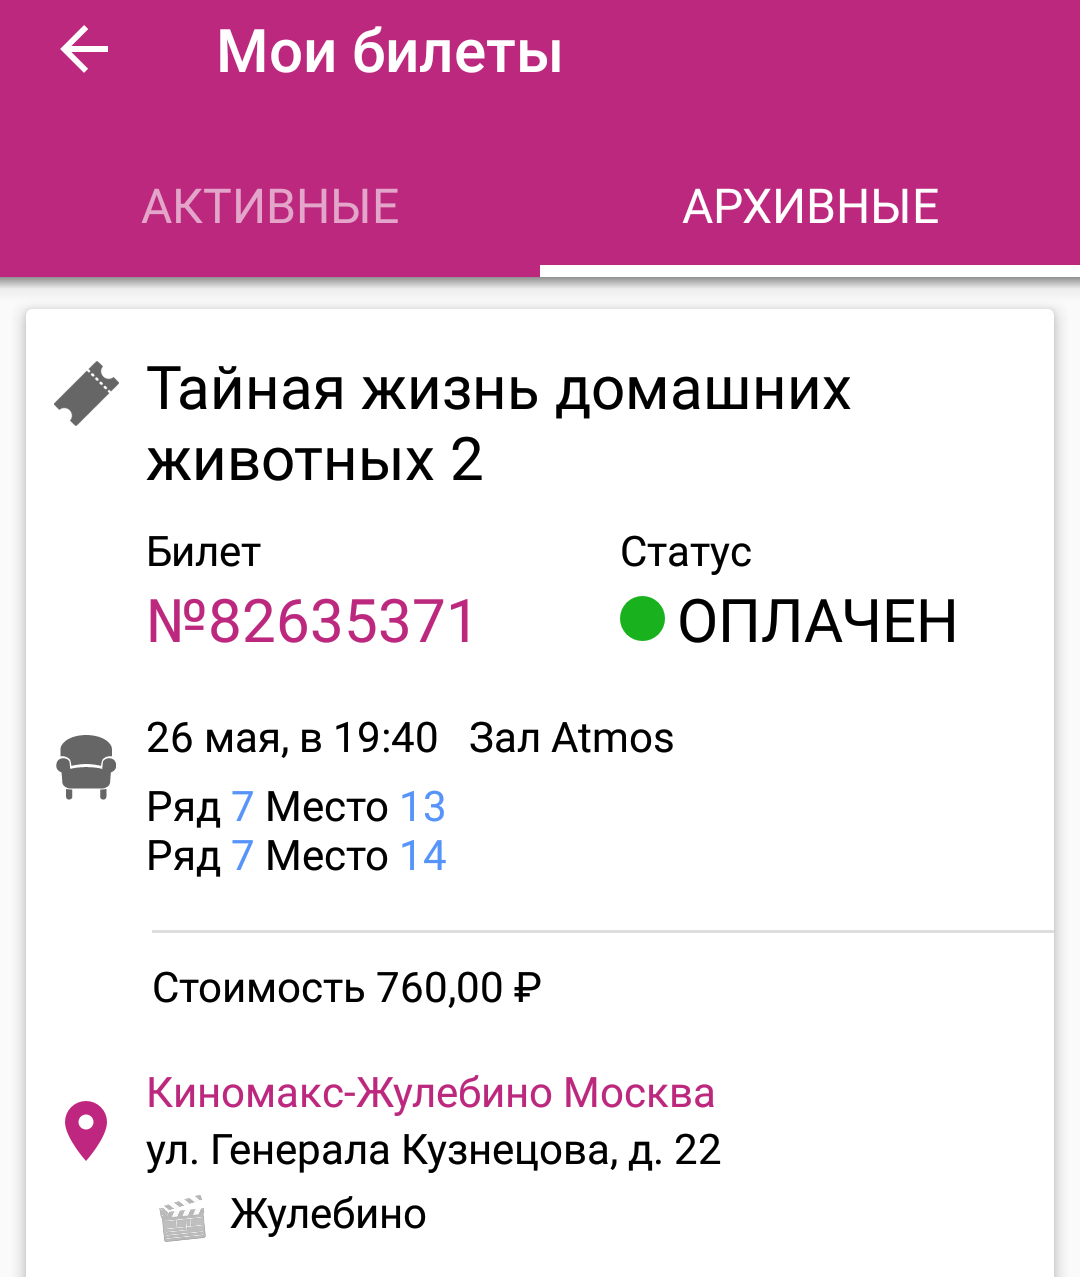 Fire alarm in Kinomax shopping center Milya. - My, No rating, Fire alarm, Kinomax, Reply to post, Longpost